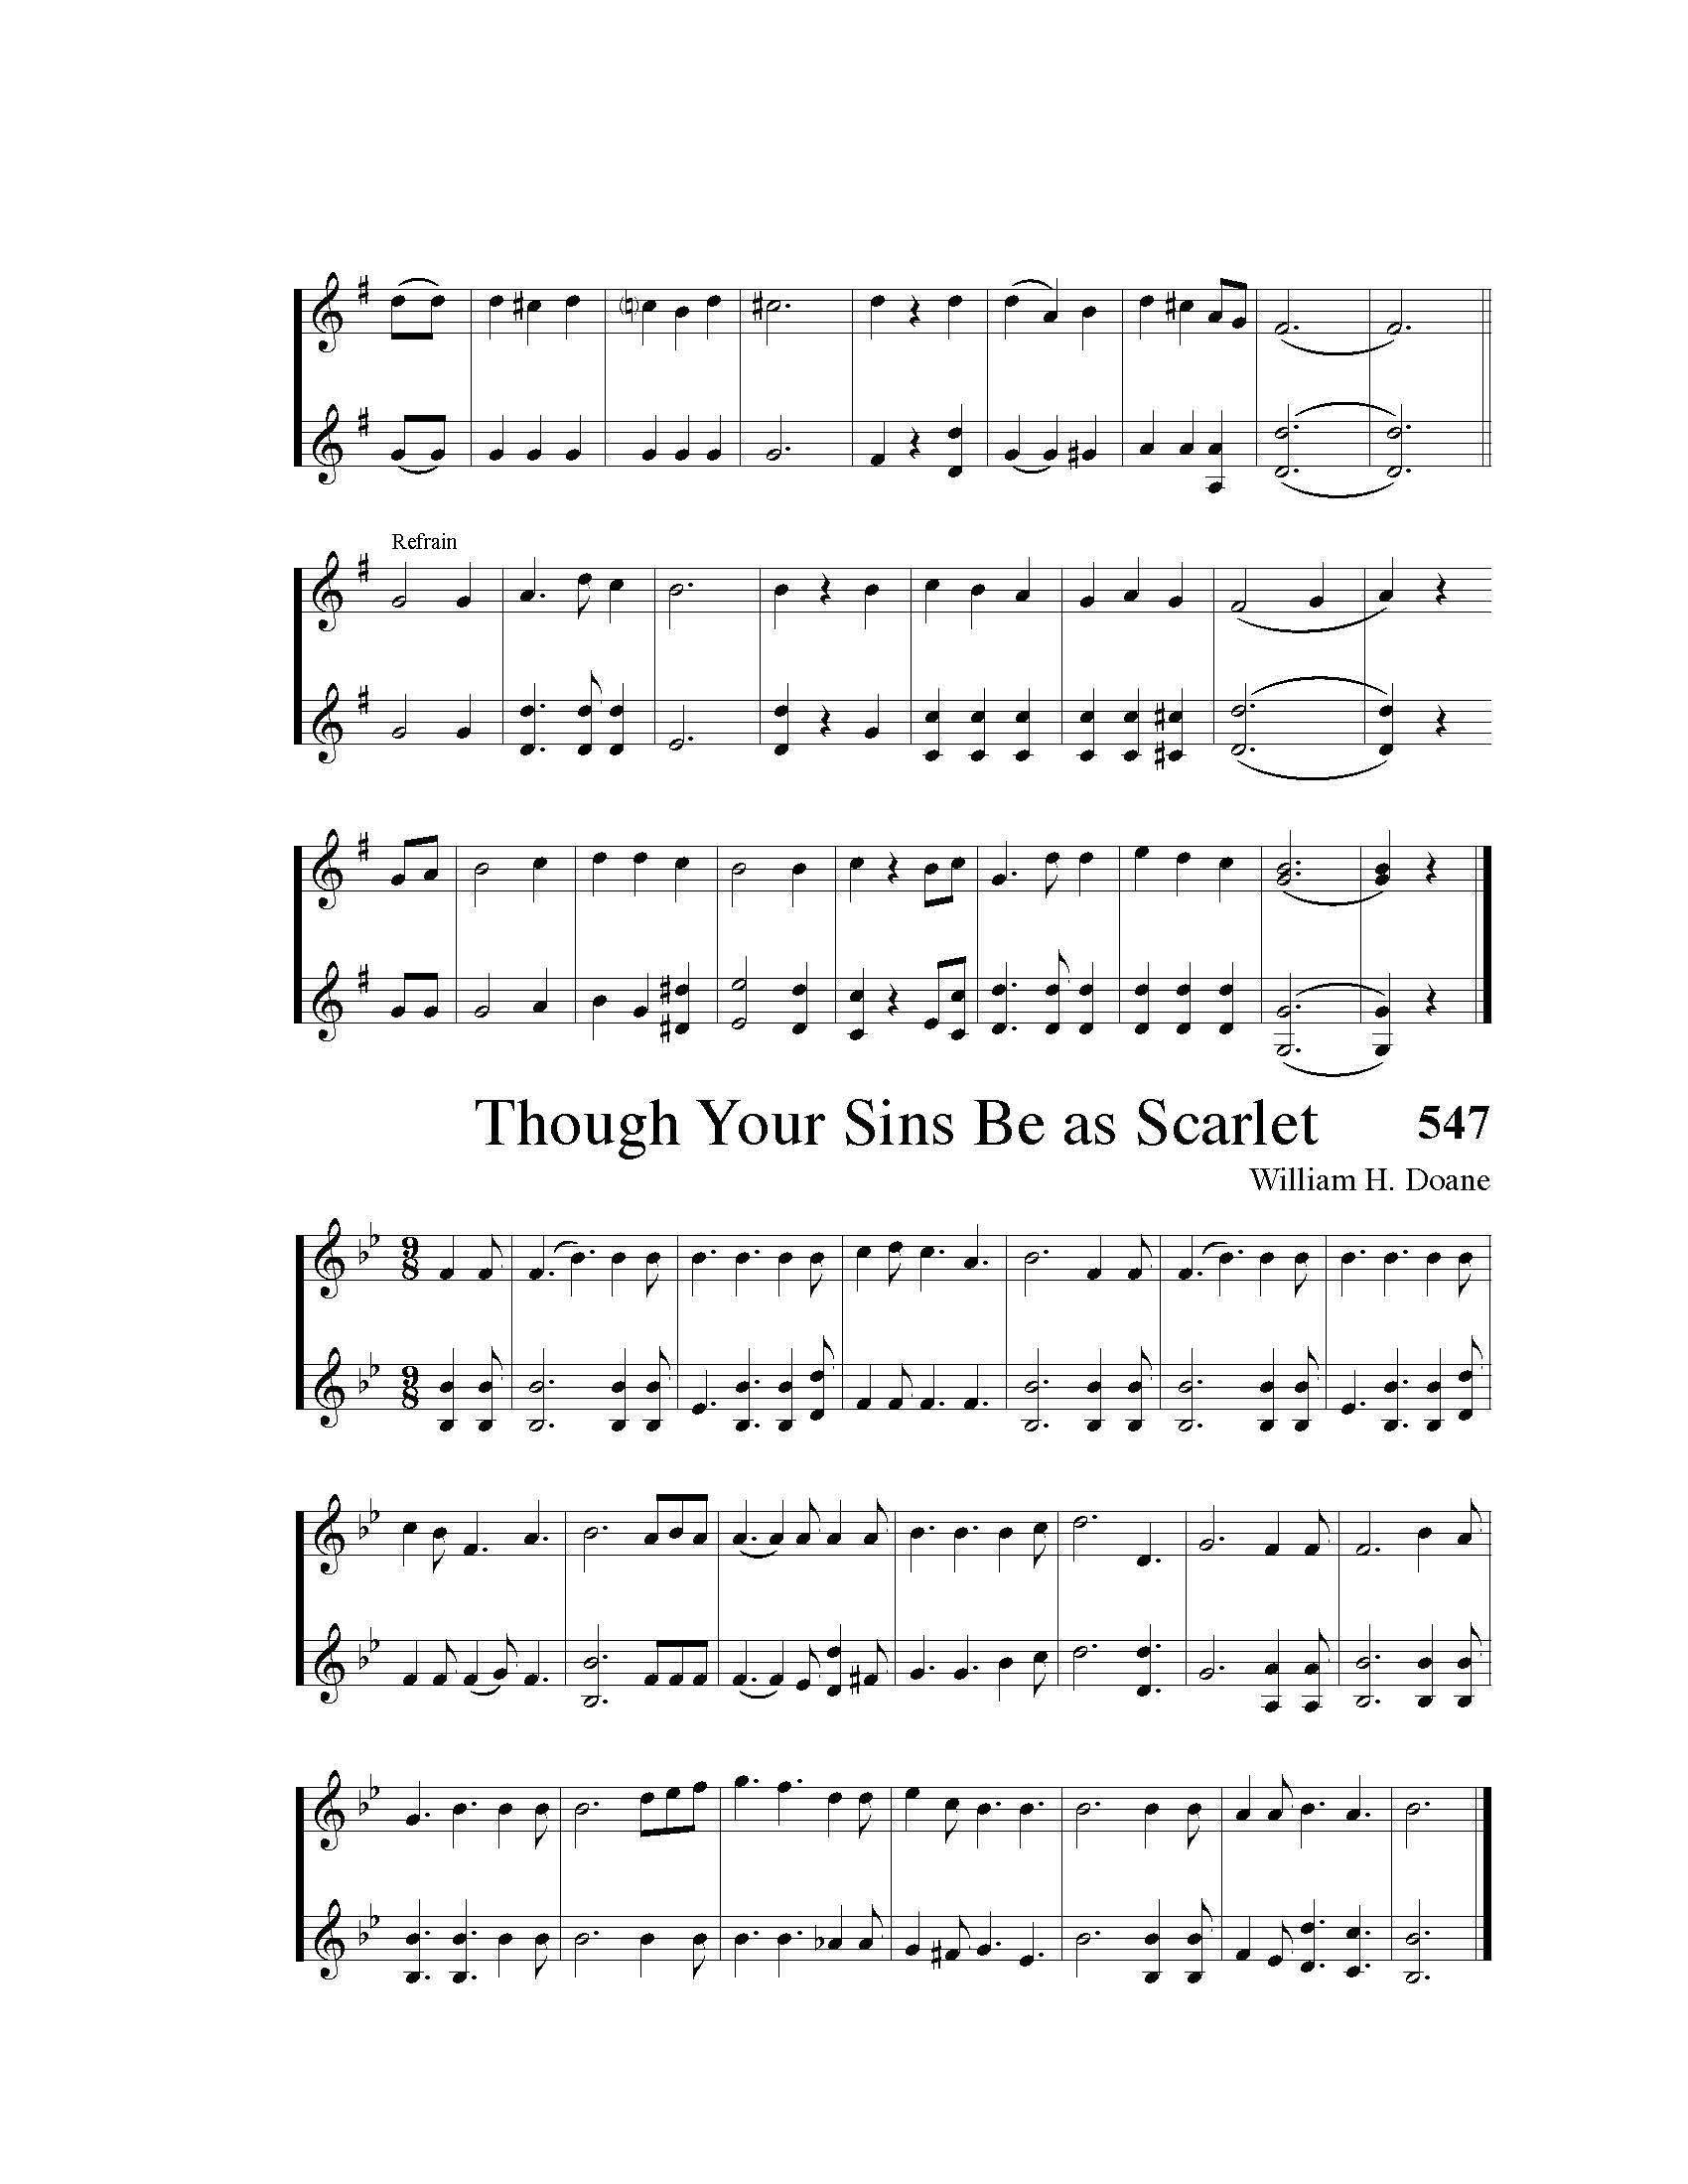 Living Hymns Orchestration: LH13  B flat (Bass Clarinet, Baritone T.C., Tenor Sax)